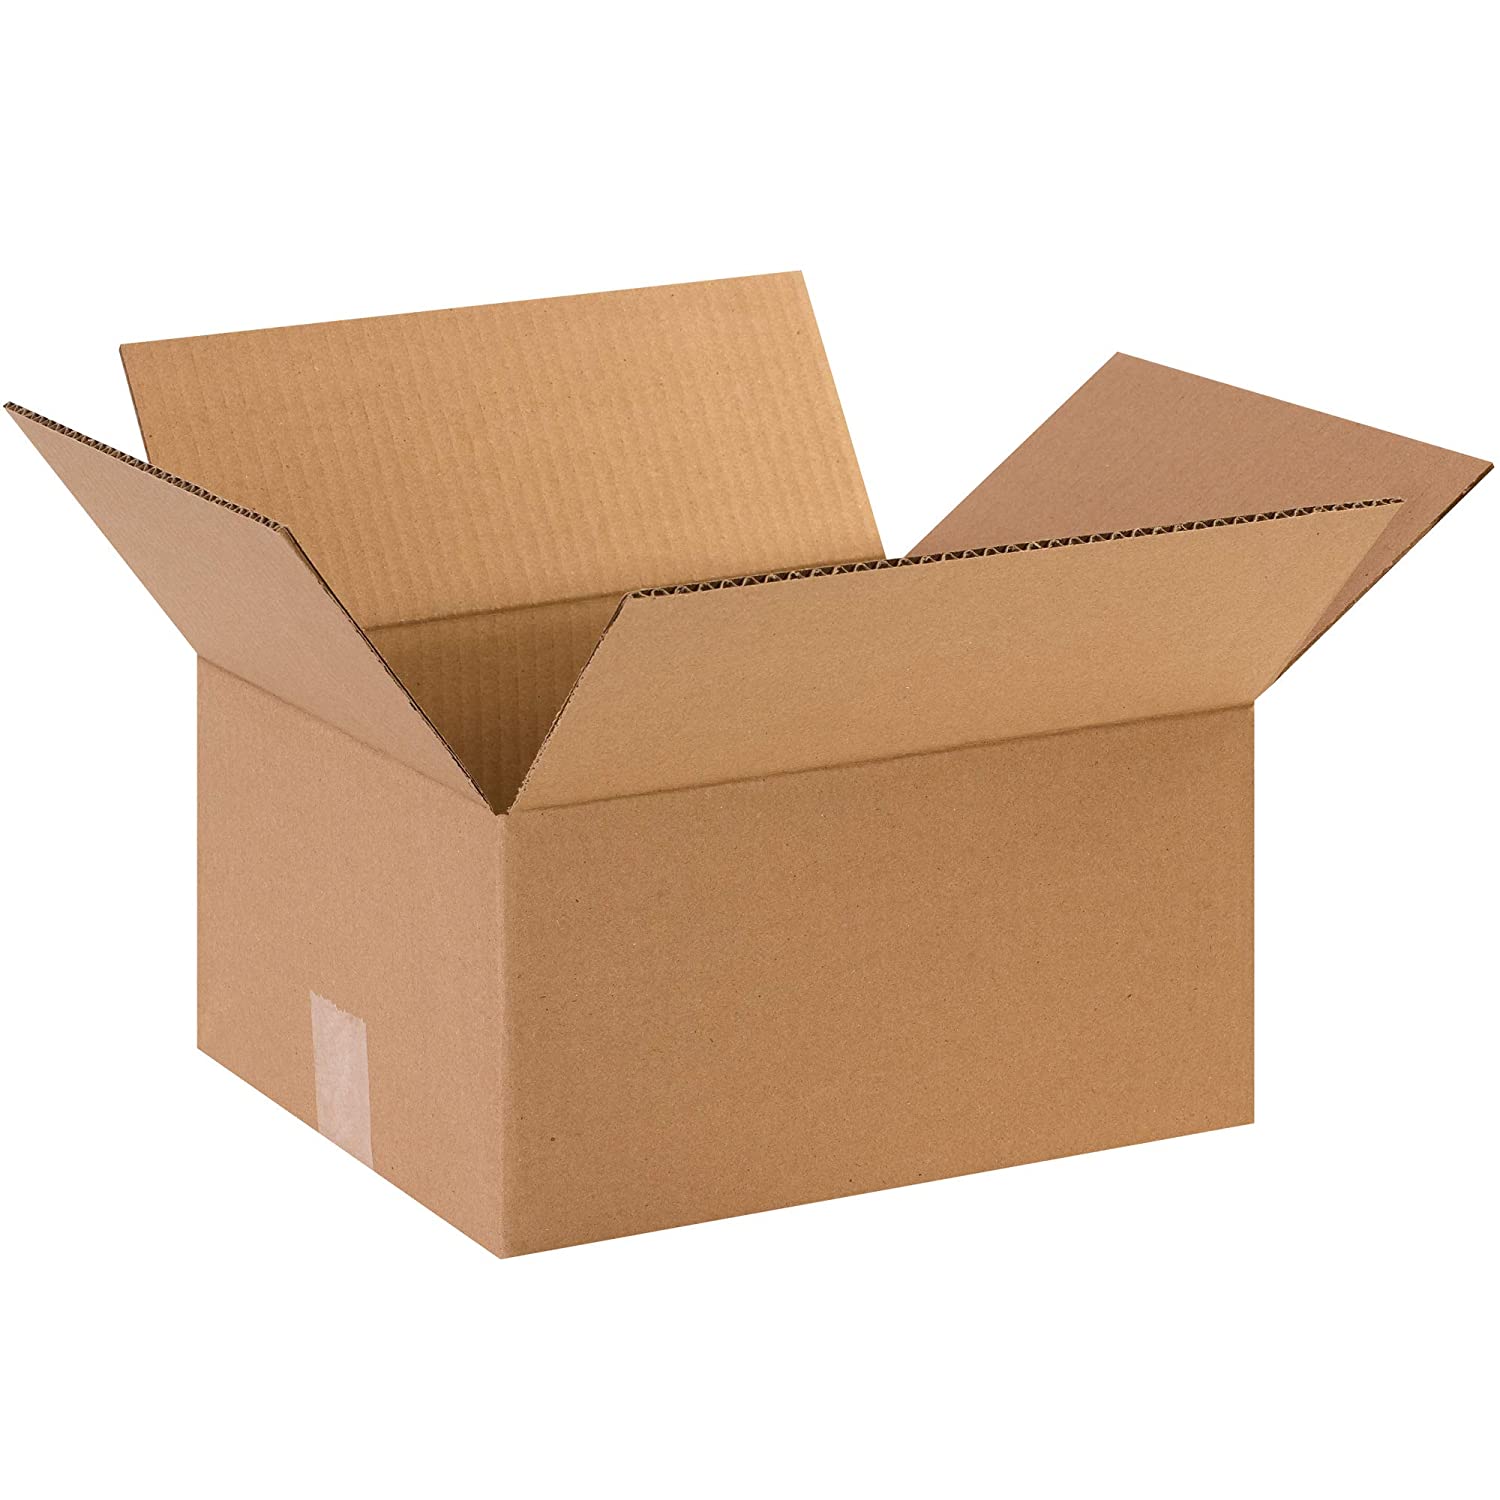 rectangular shipping boxes